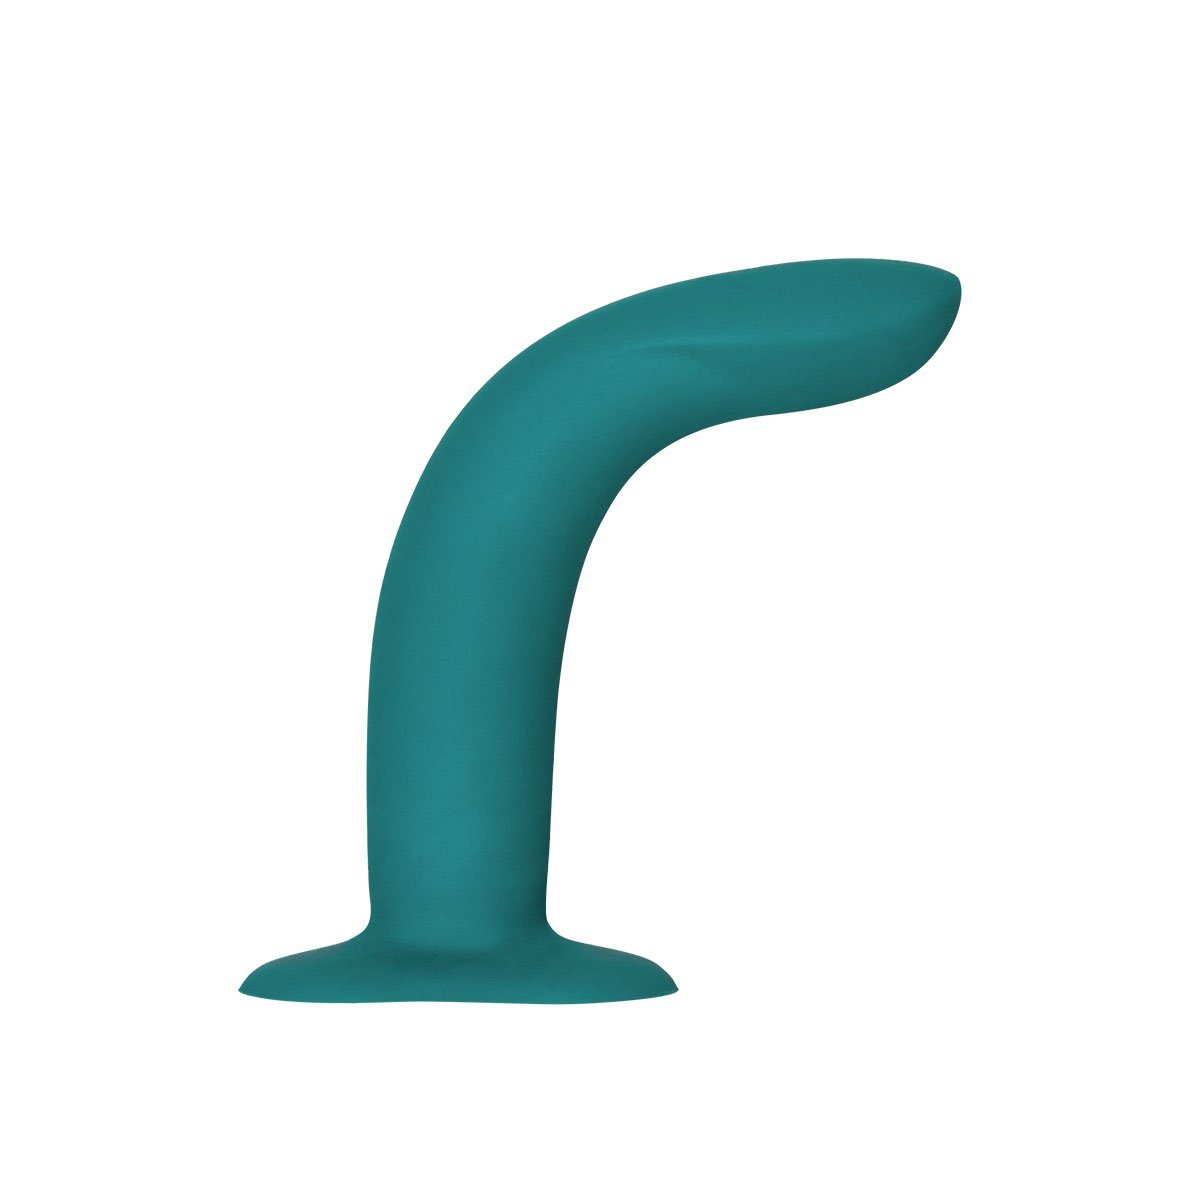 FUN FACTORY Limba Flex M 吸盤式可彎曲柔軟按摩棒 假陽具 購買